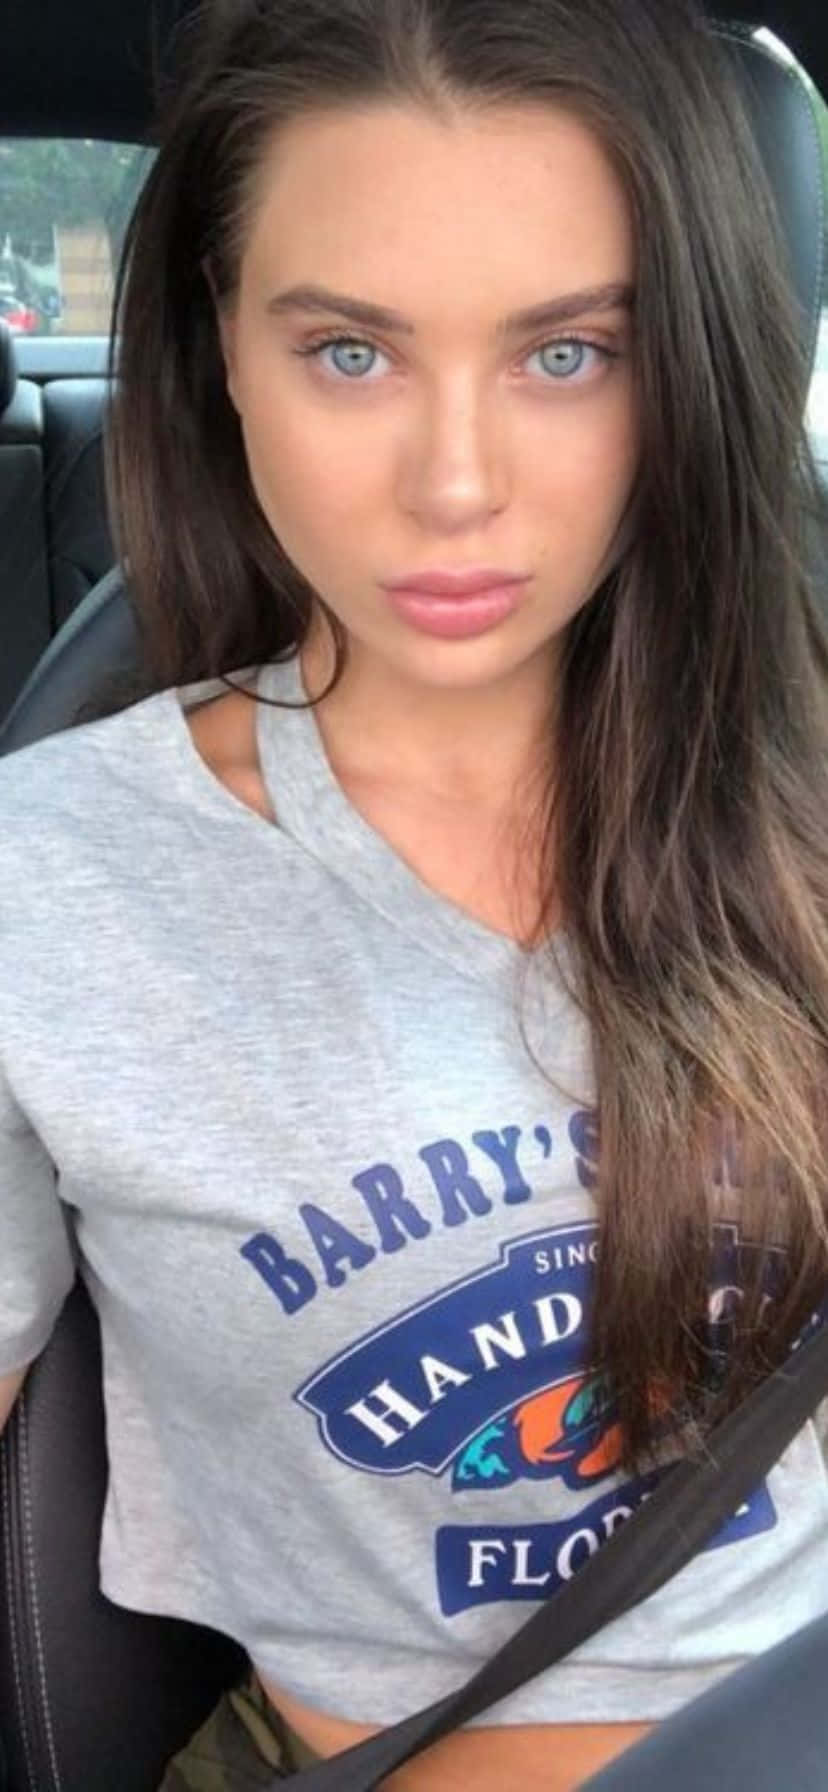 Blue Eyed Woman Car Selfie Wallpaper